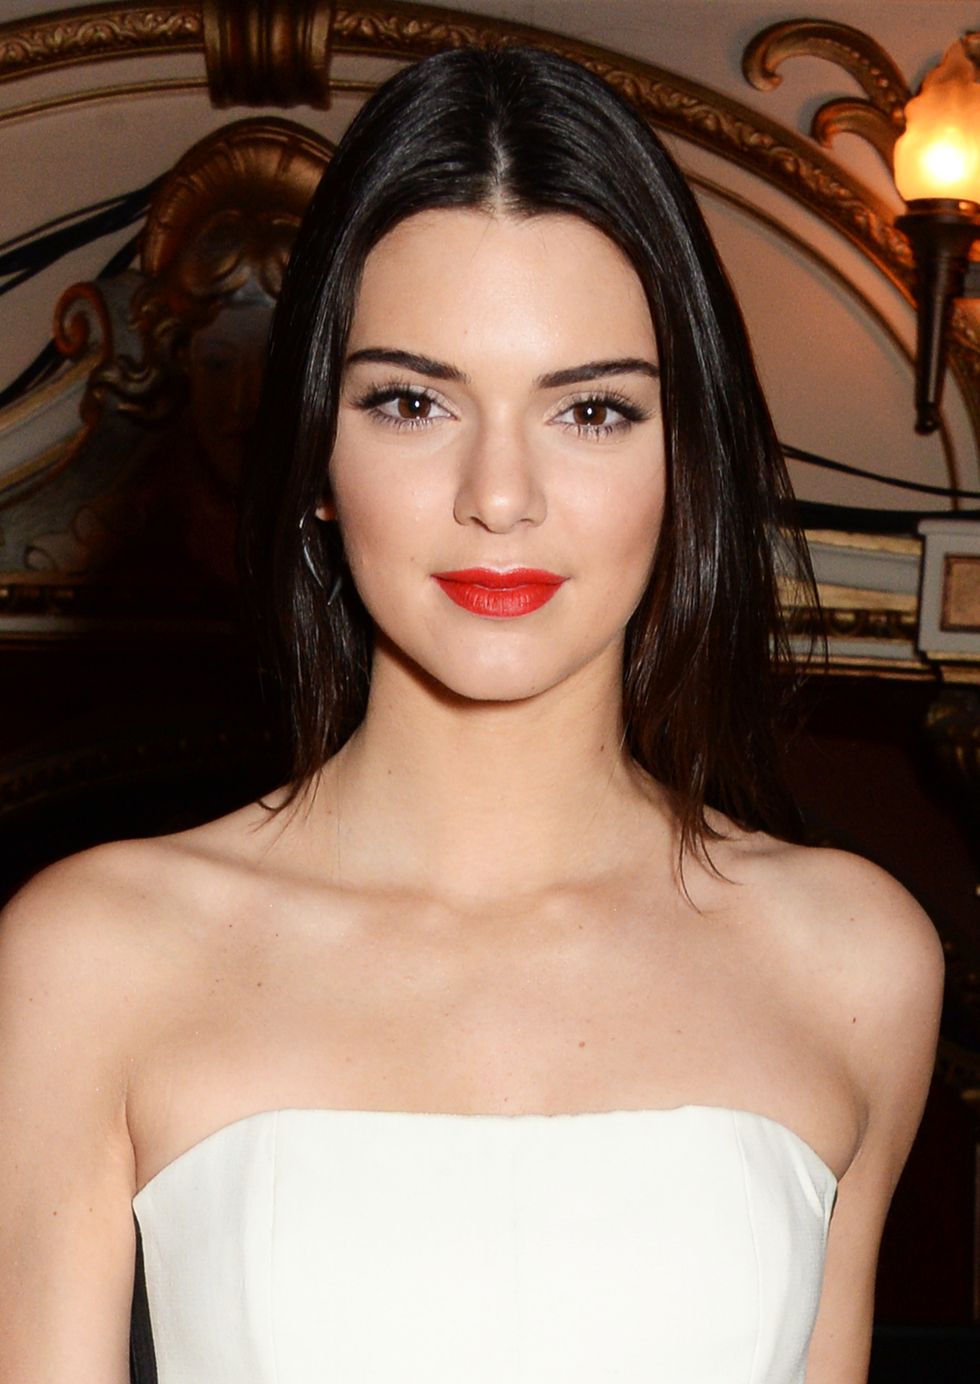 Kendall Jenner at BFAs 2014 - British Fashion Awards 2014: Celebrity beauty looks